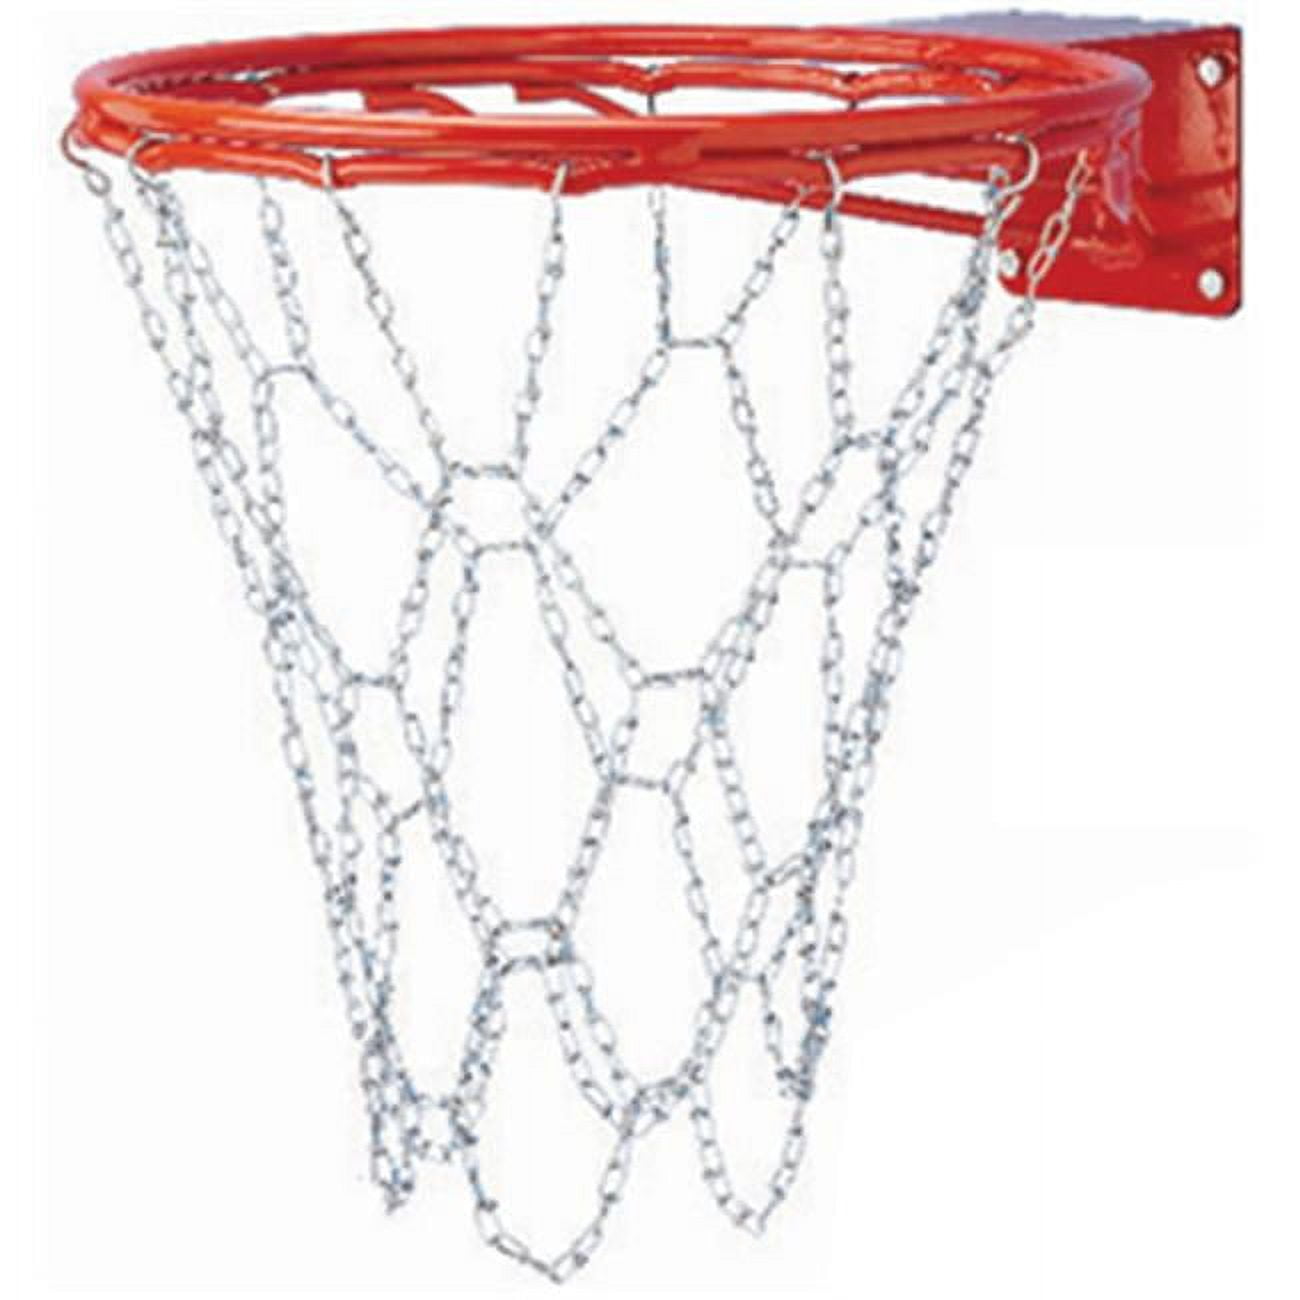 Basketball Chain Nets